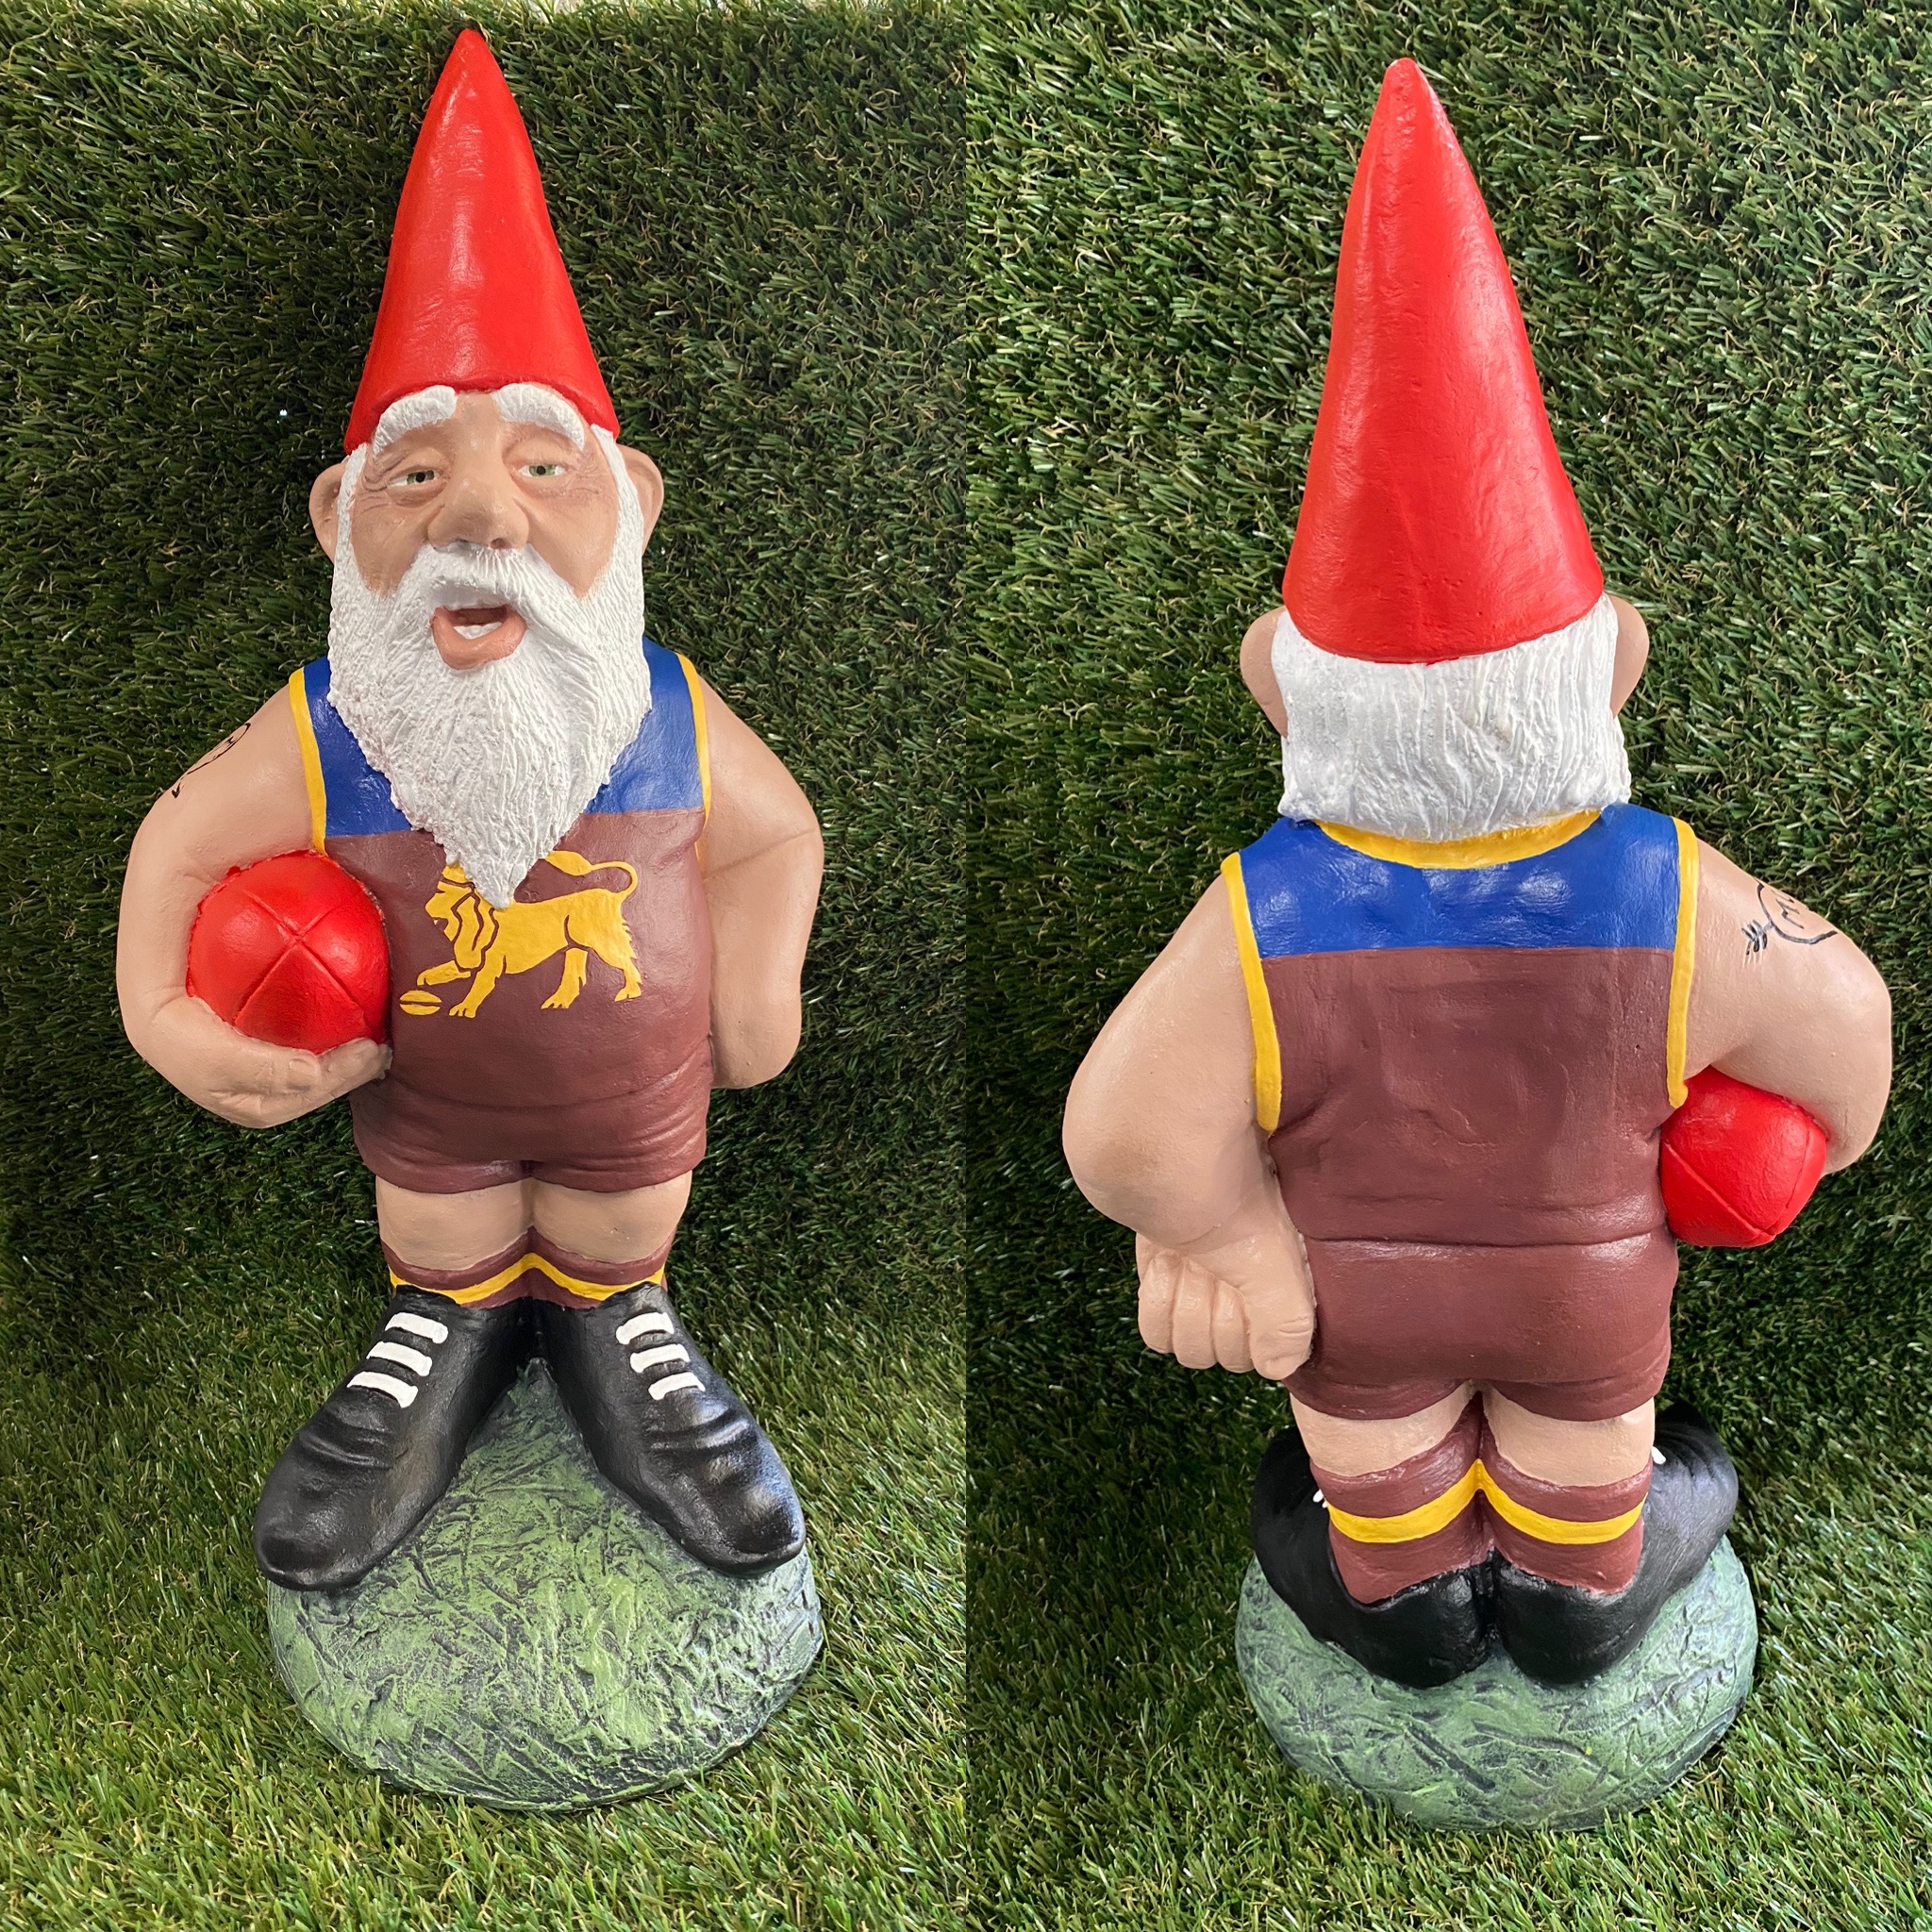 Go Away Gnome Statue – Northcote Pottery